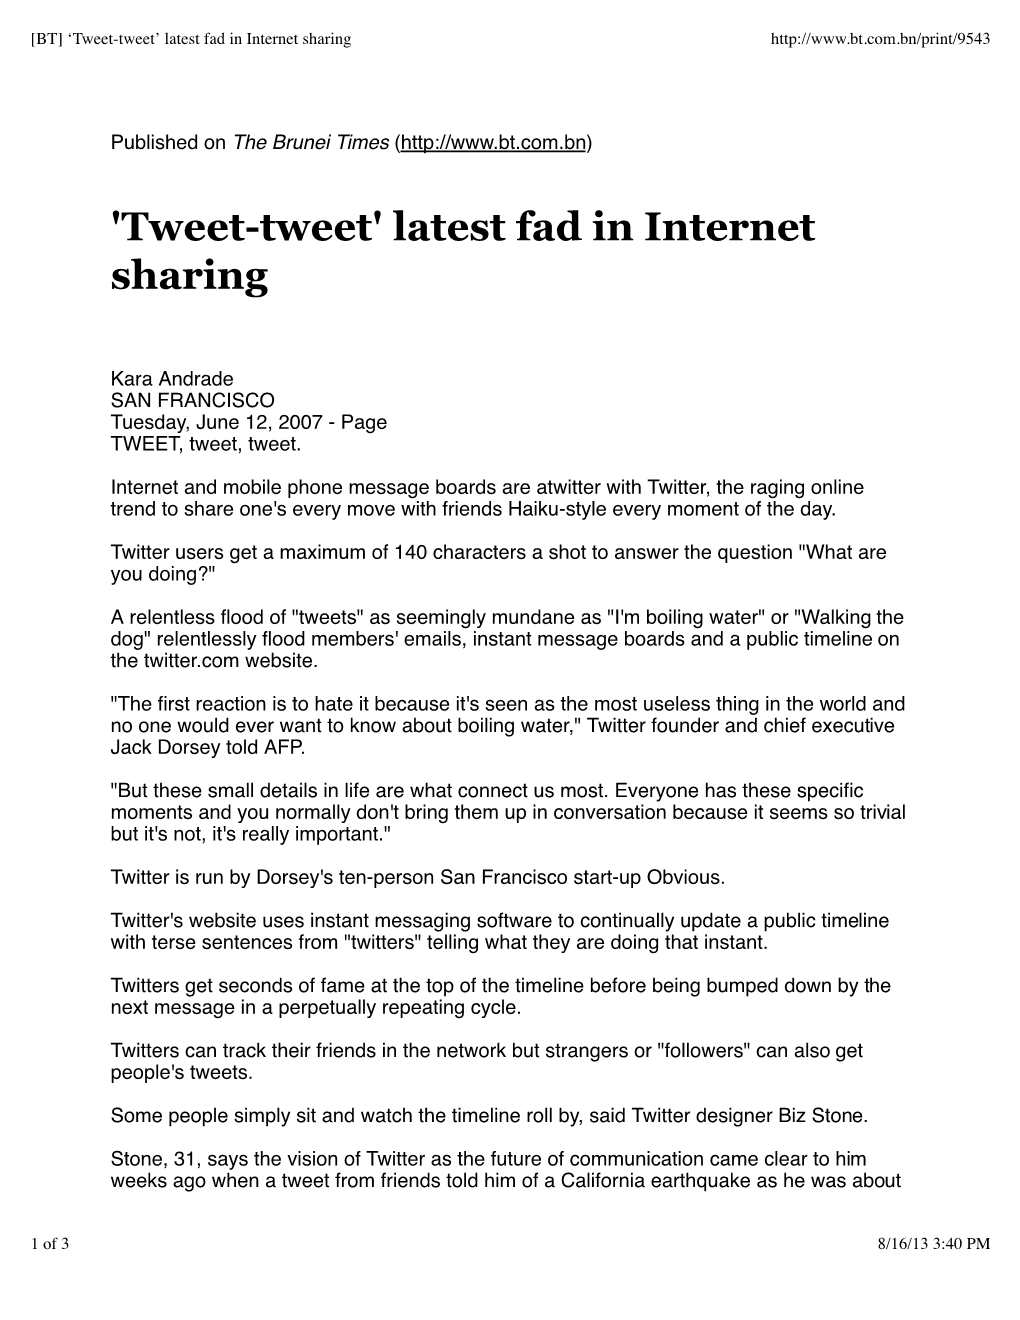 [BT] 'Tweet-Tweet' Latest Fad in Internet Sharing